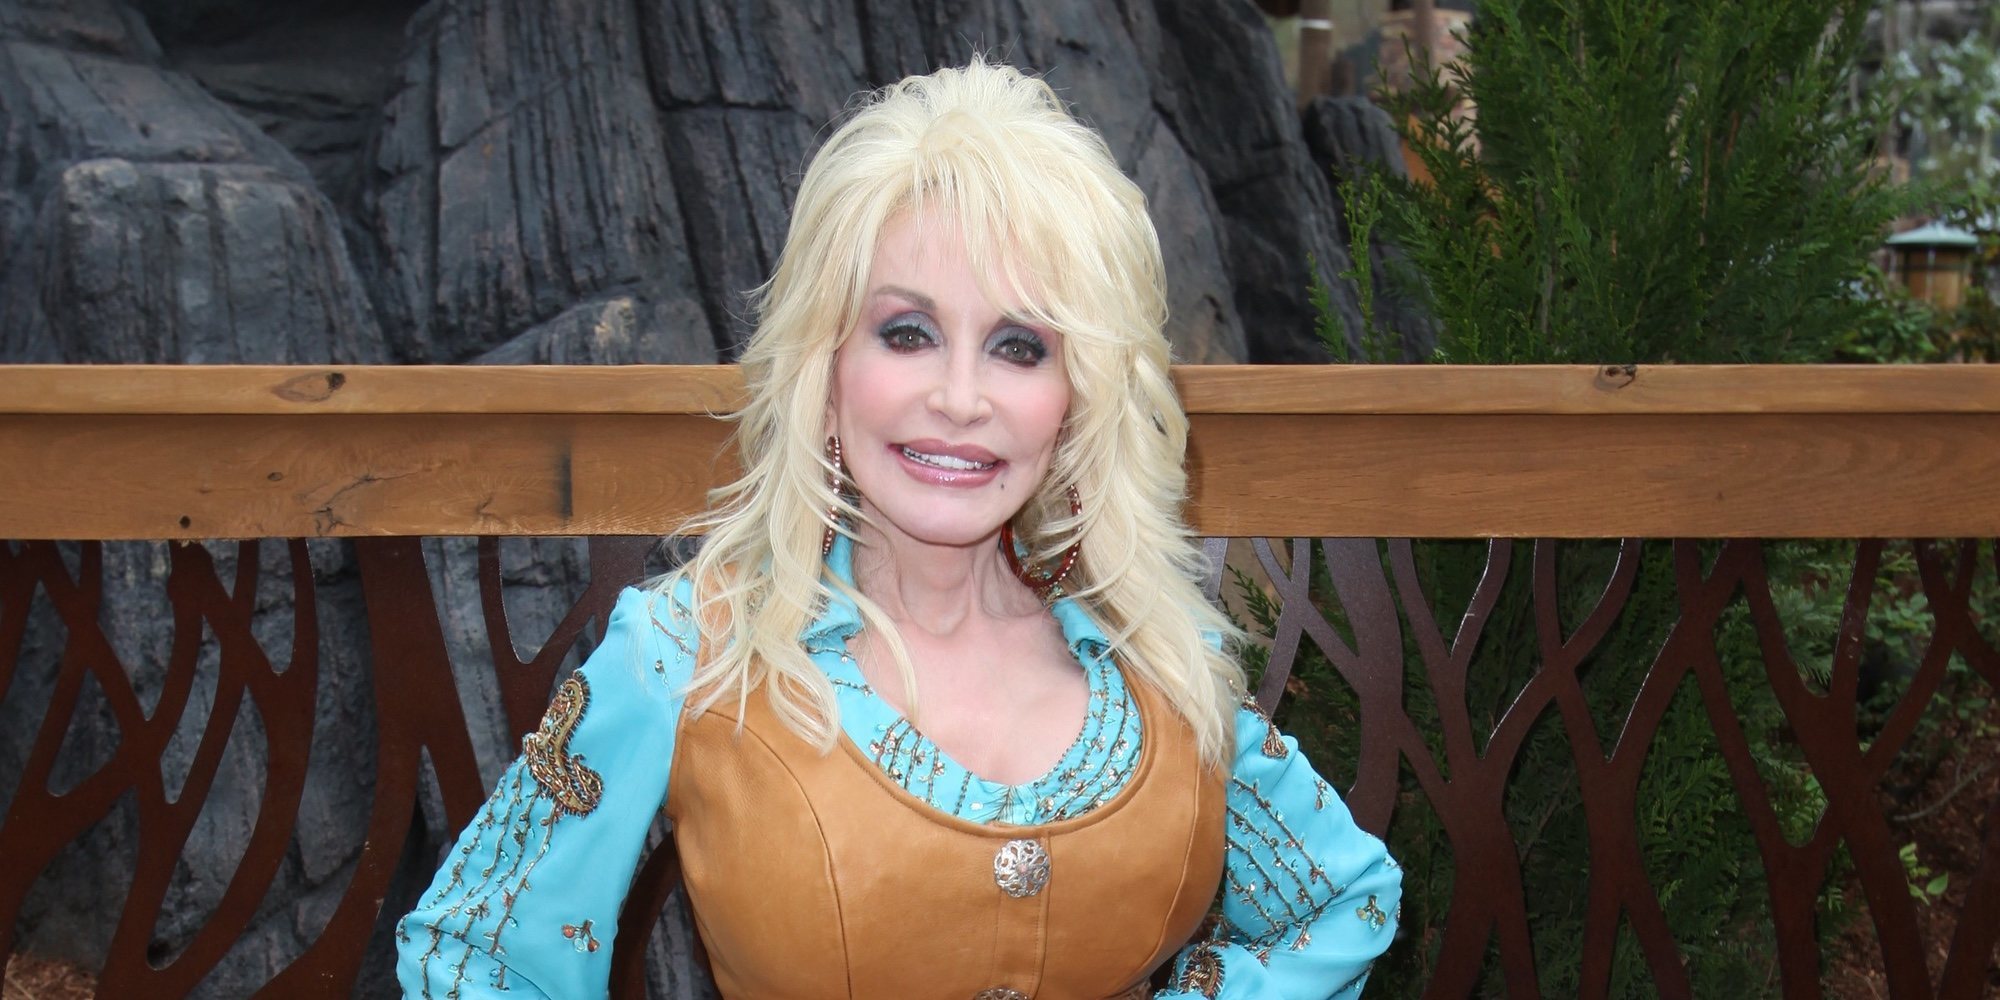 Dolly Parton recibe la vacuna del coronavirus que ella misma financió a ritmo de 'Jolene'